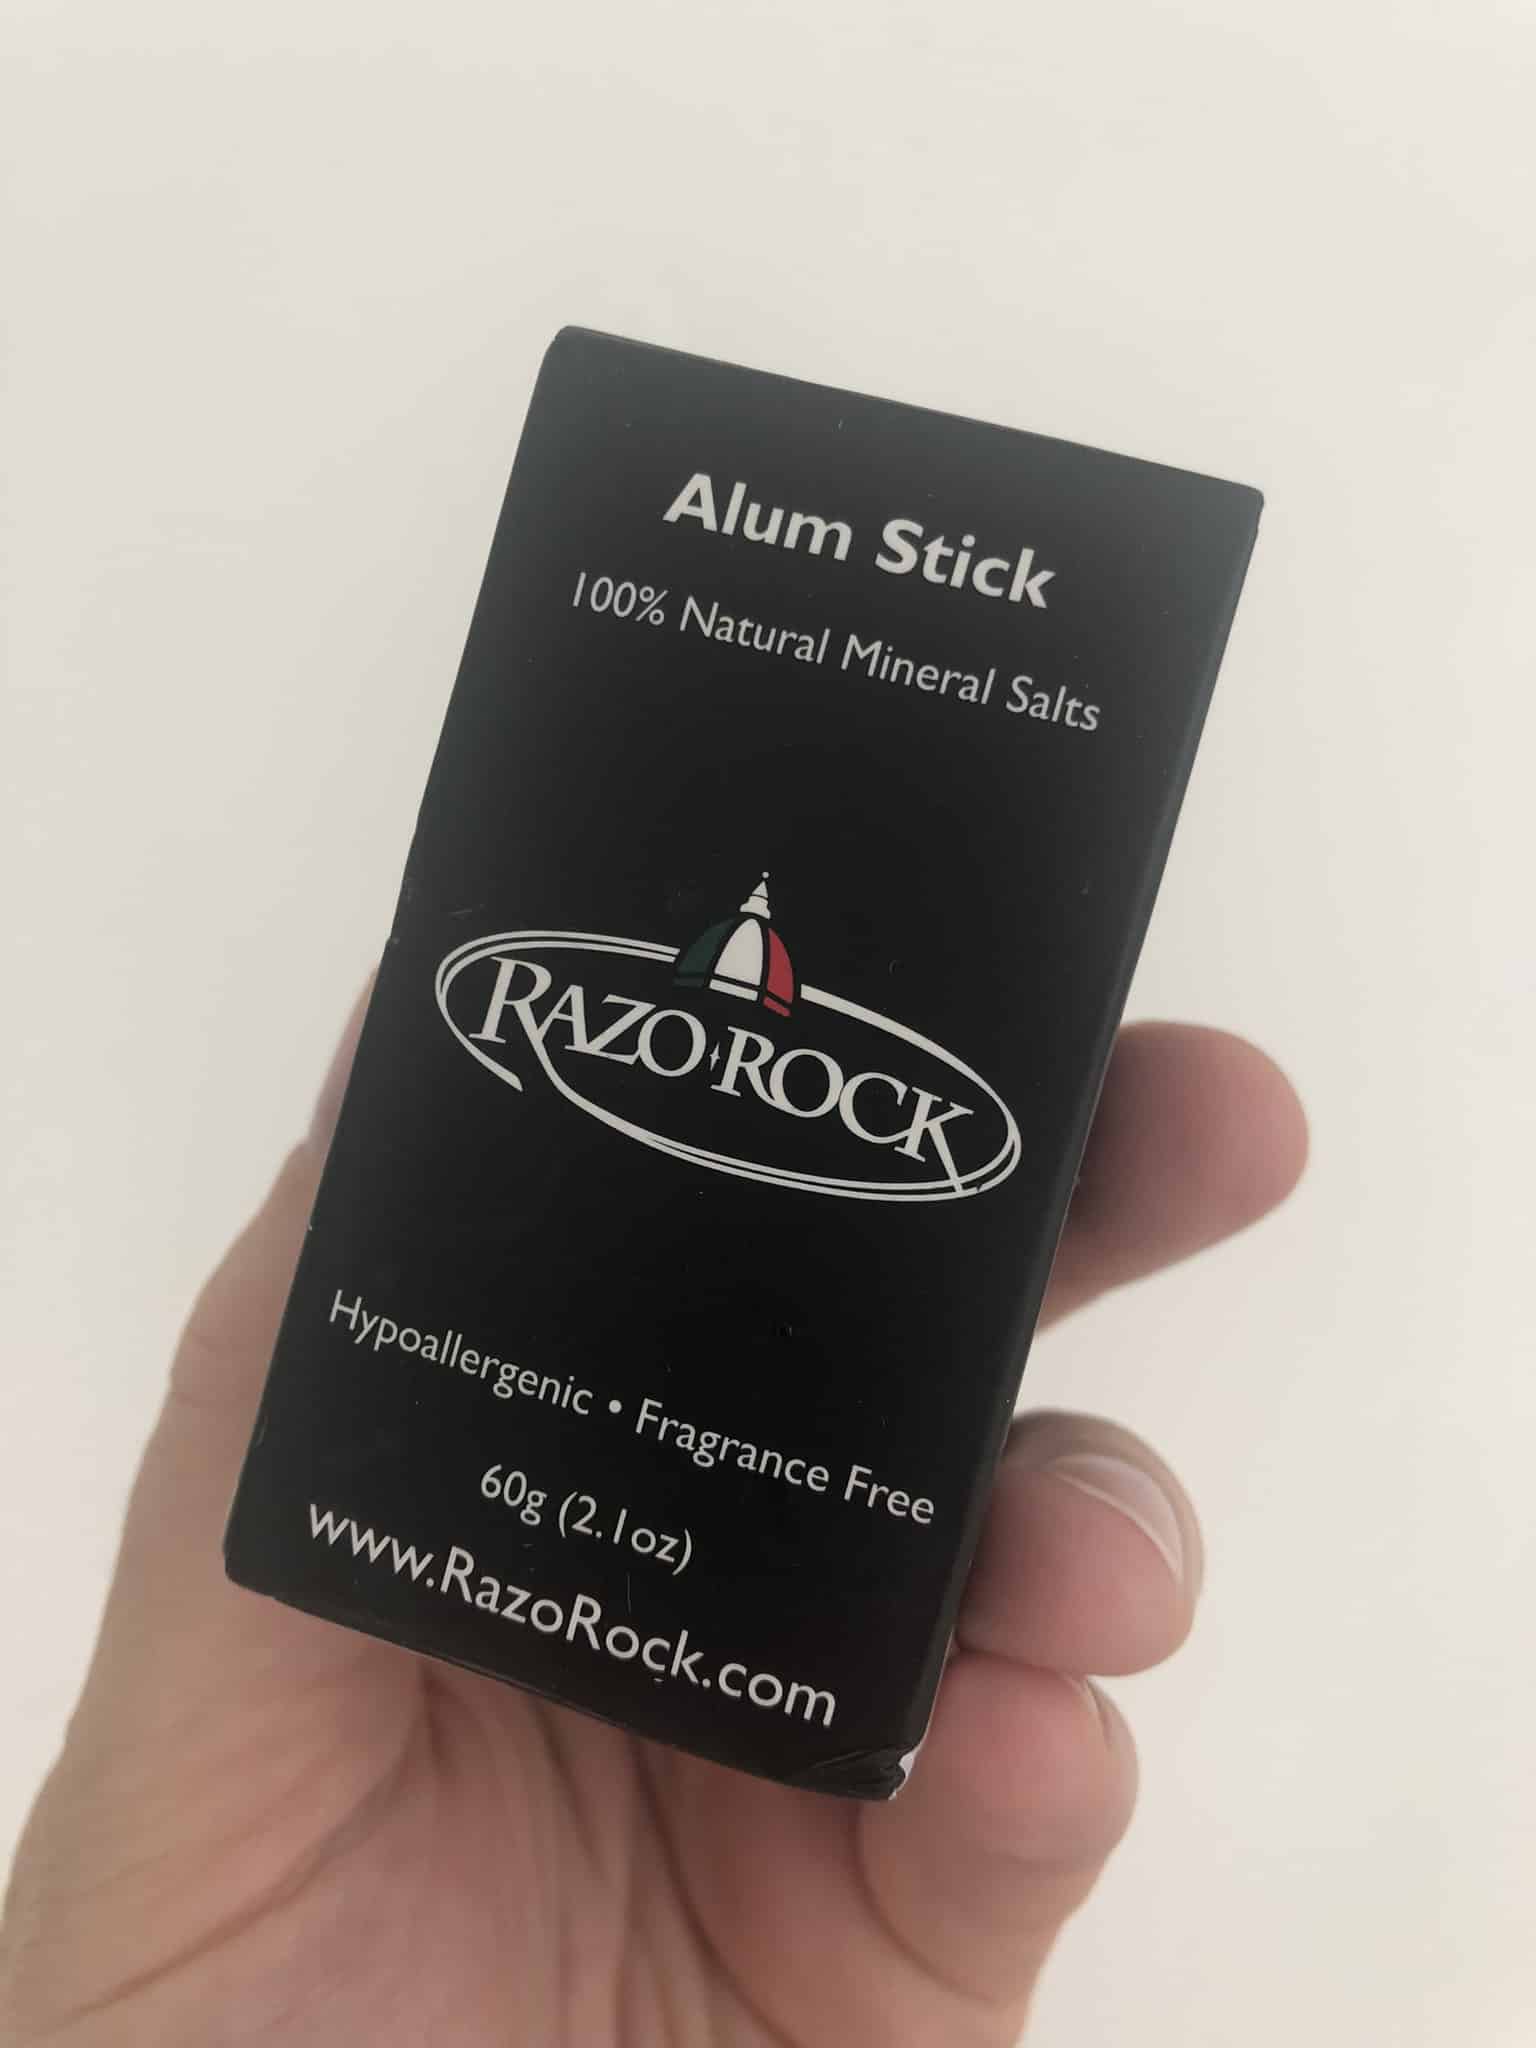 RazoRock Alum Stick Review - Packaging